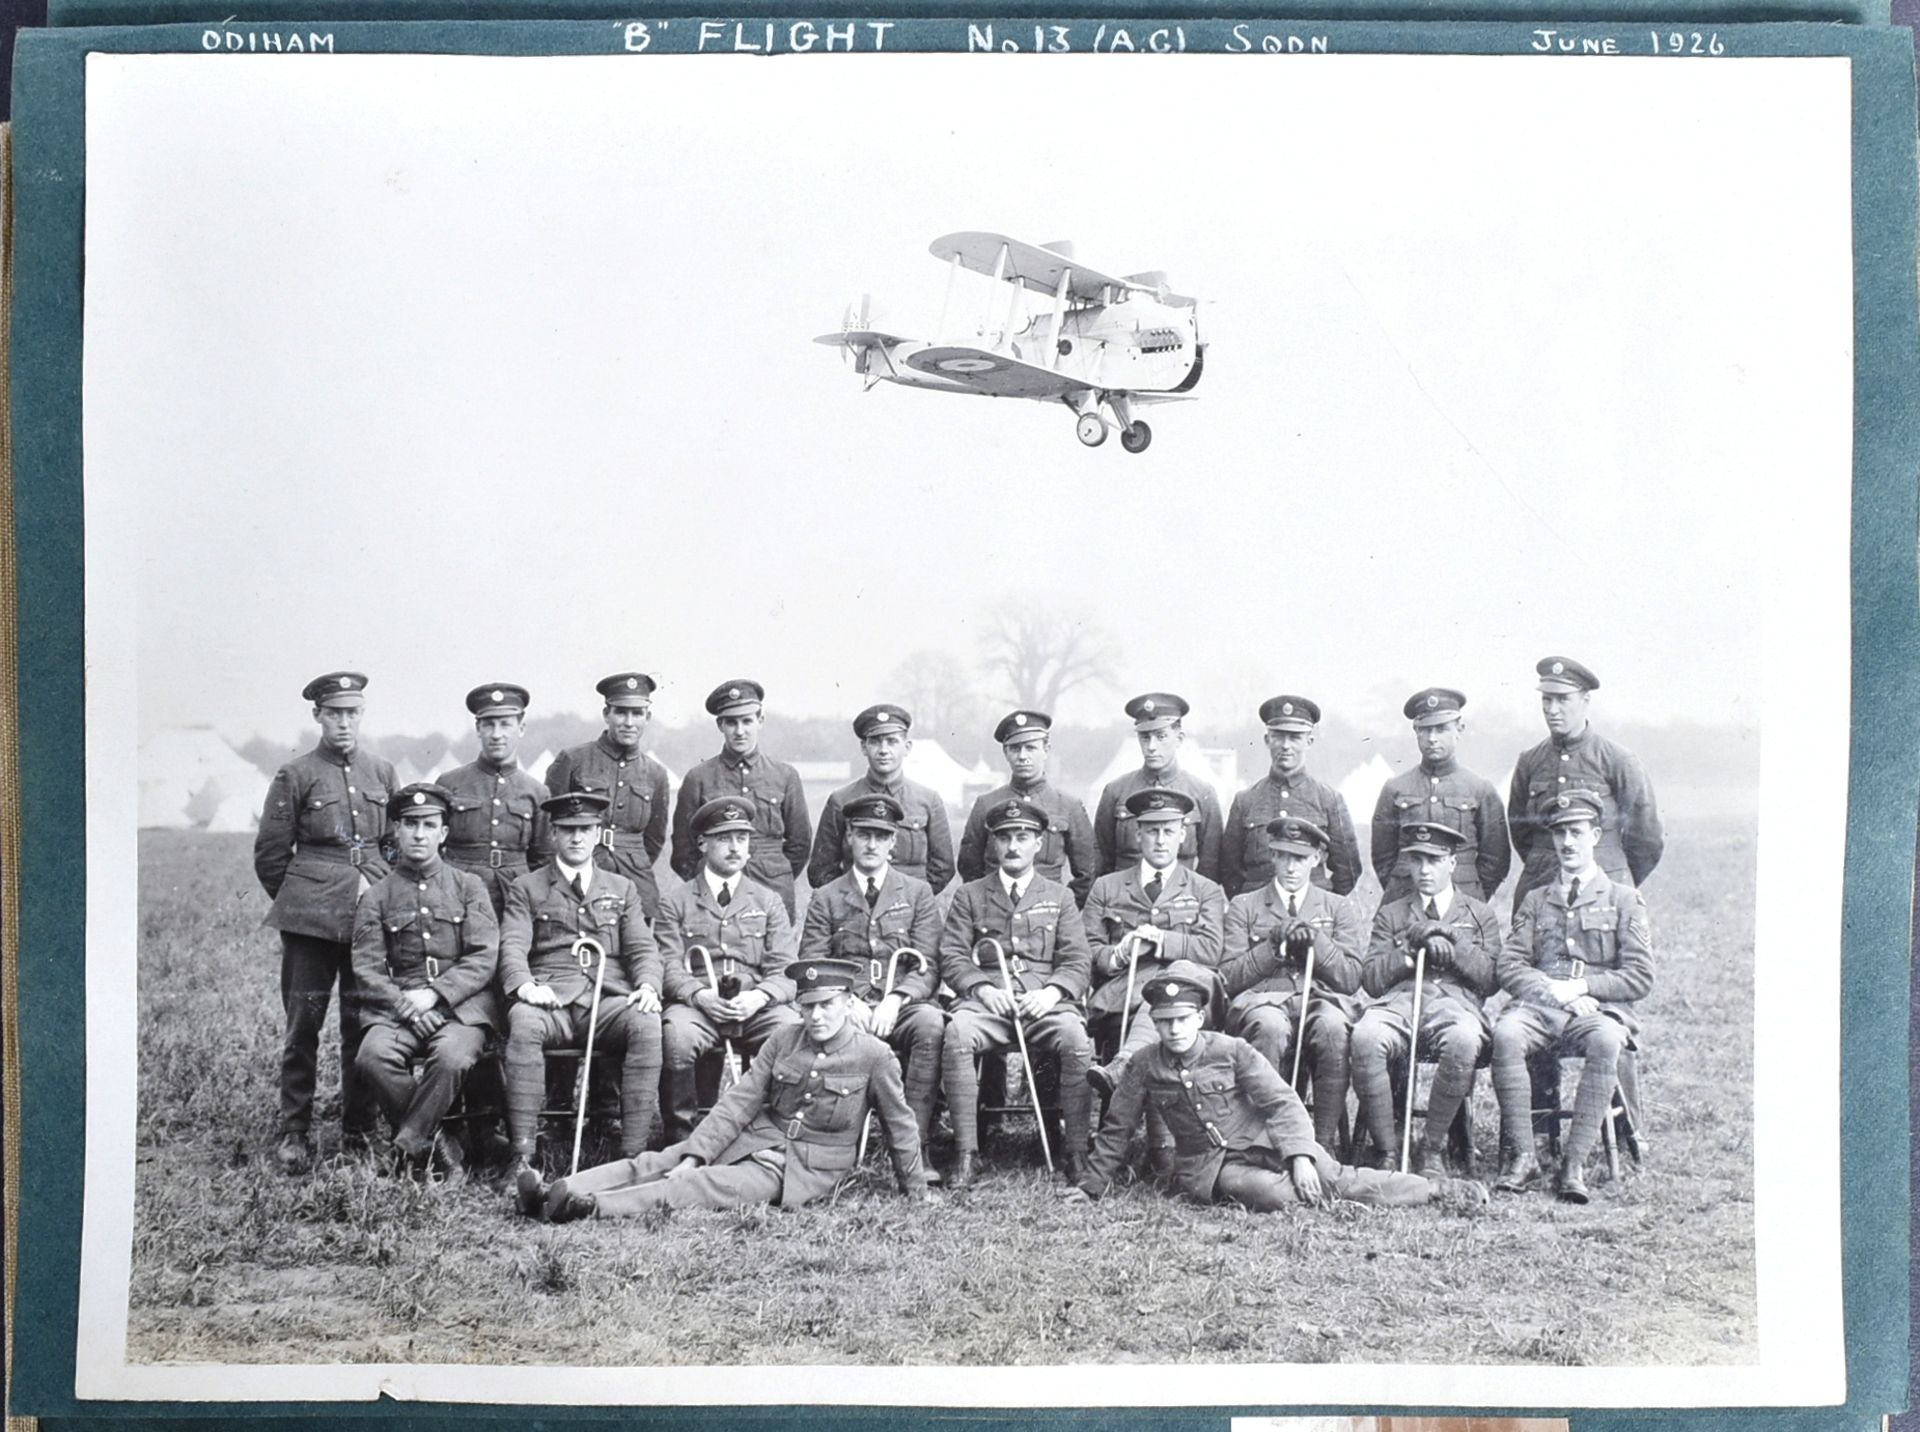 1920S RAF PHOTOGRAPH ALBUM - PLANES, CRASHES & TRIPS